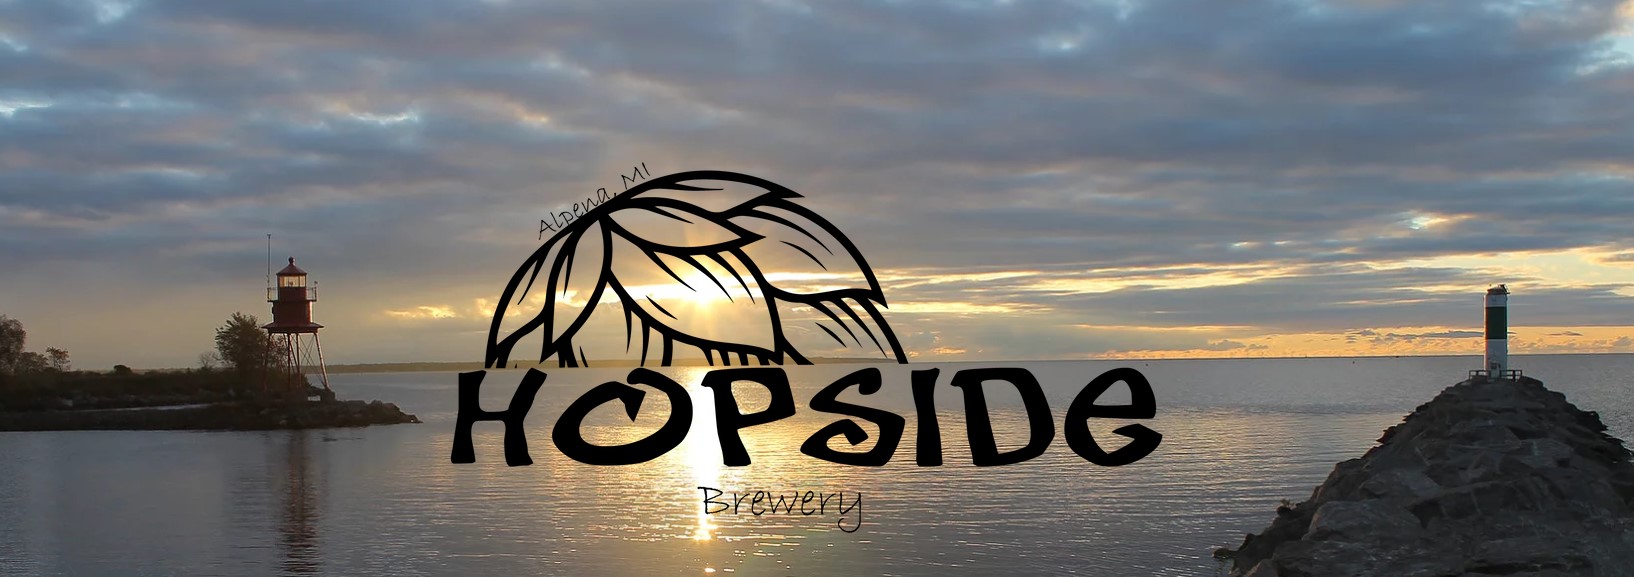 HopSide Brewery